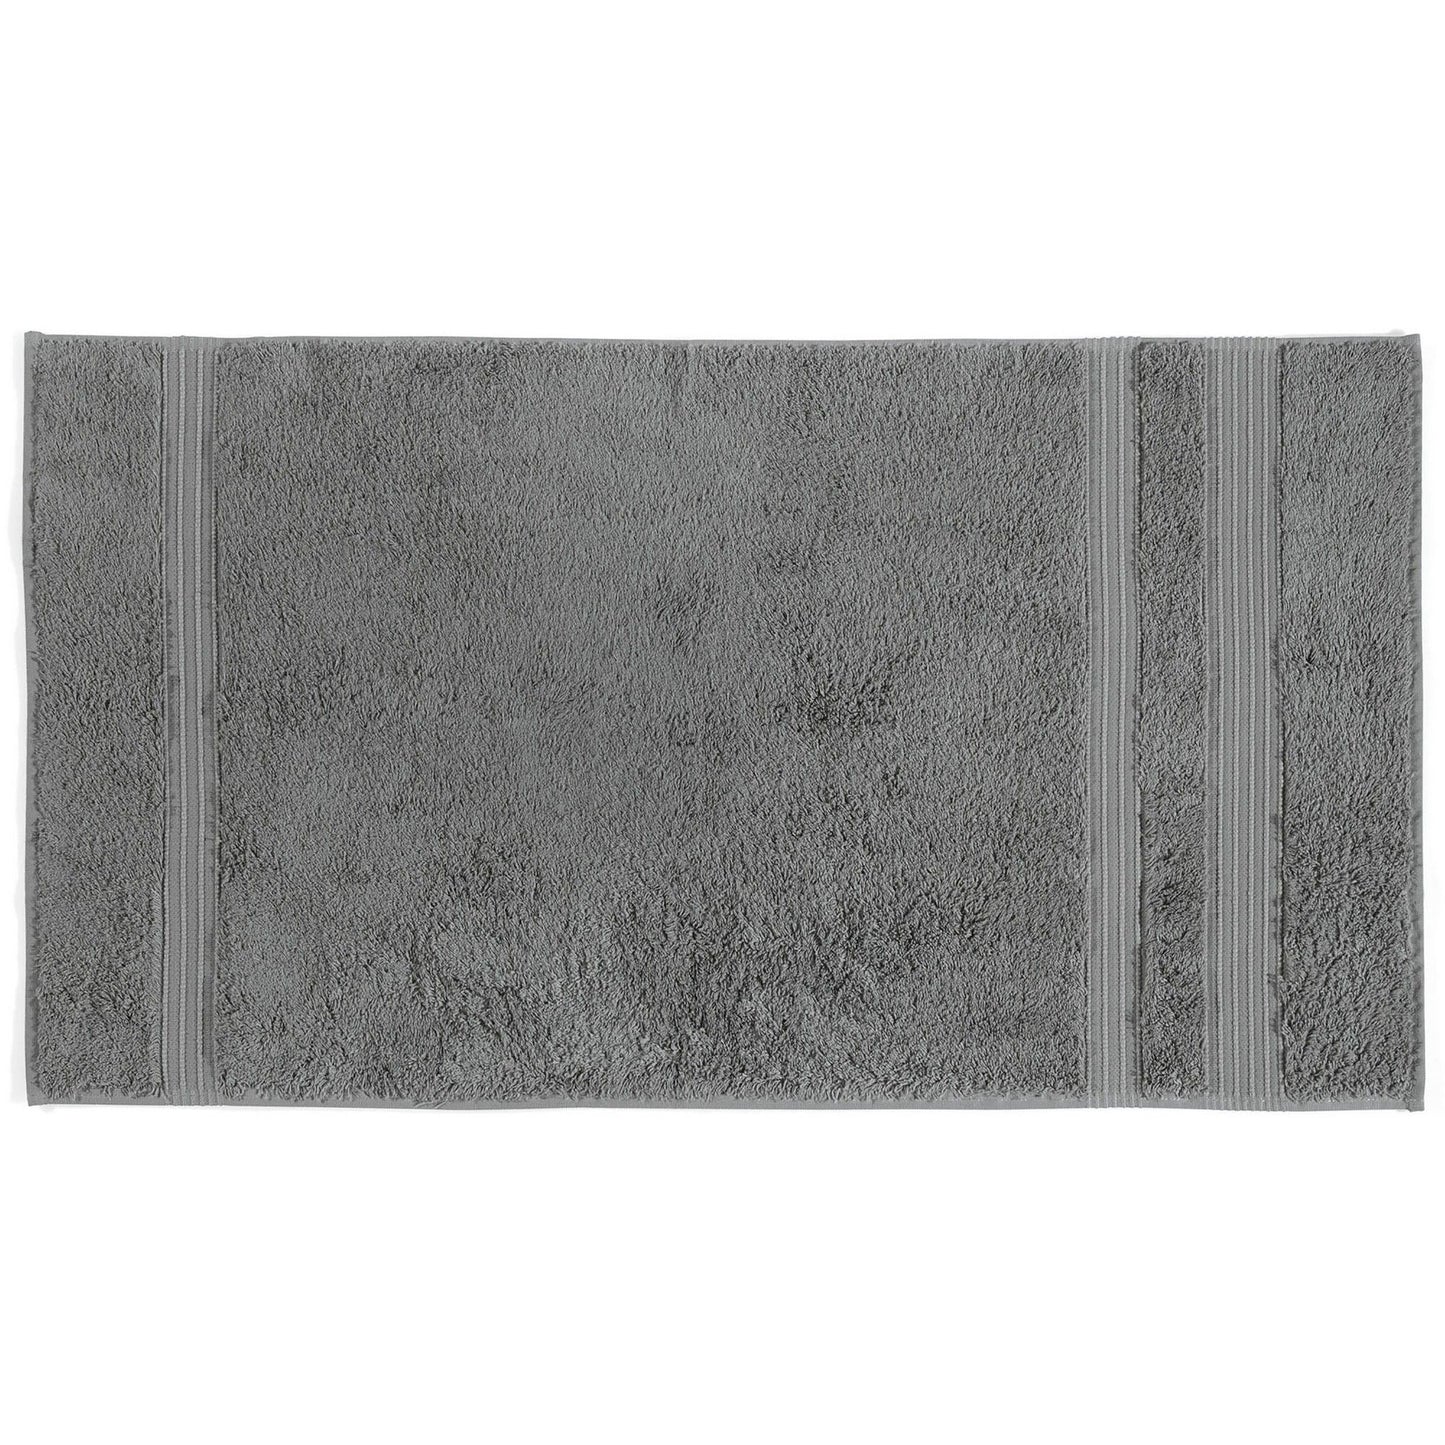 Håndklæde -  London Bath (70 x 140) - Anthracite